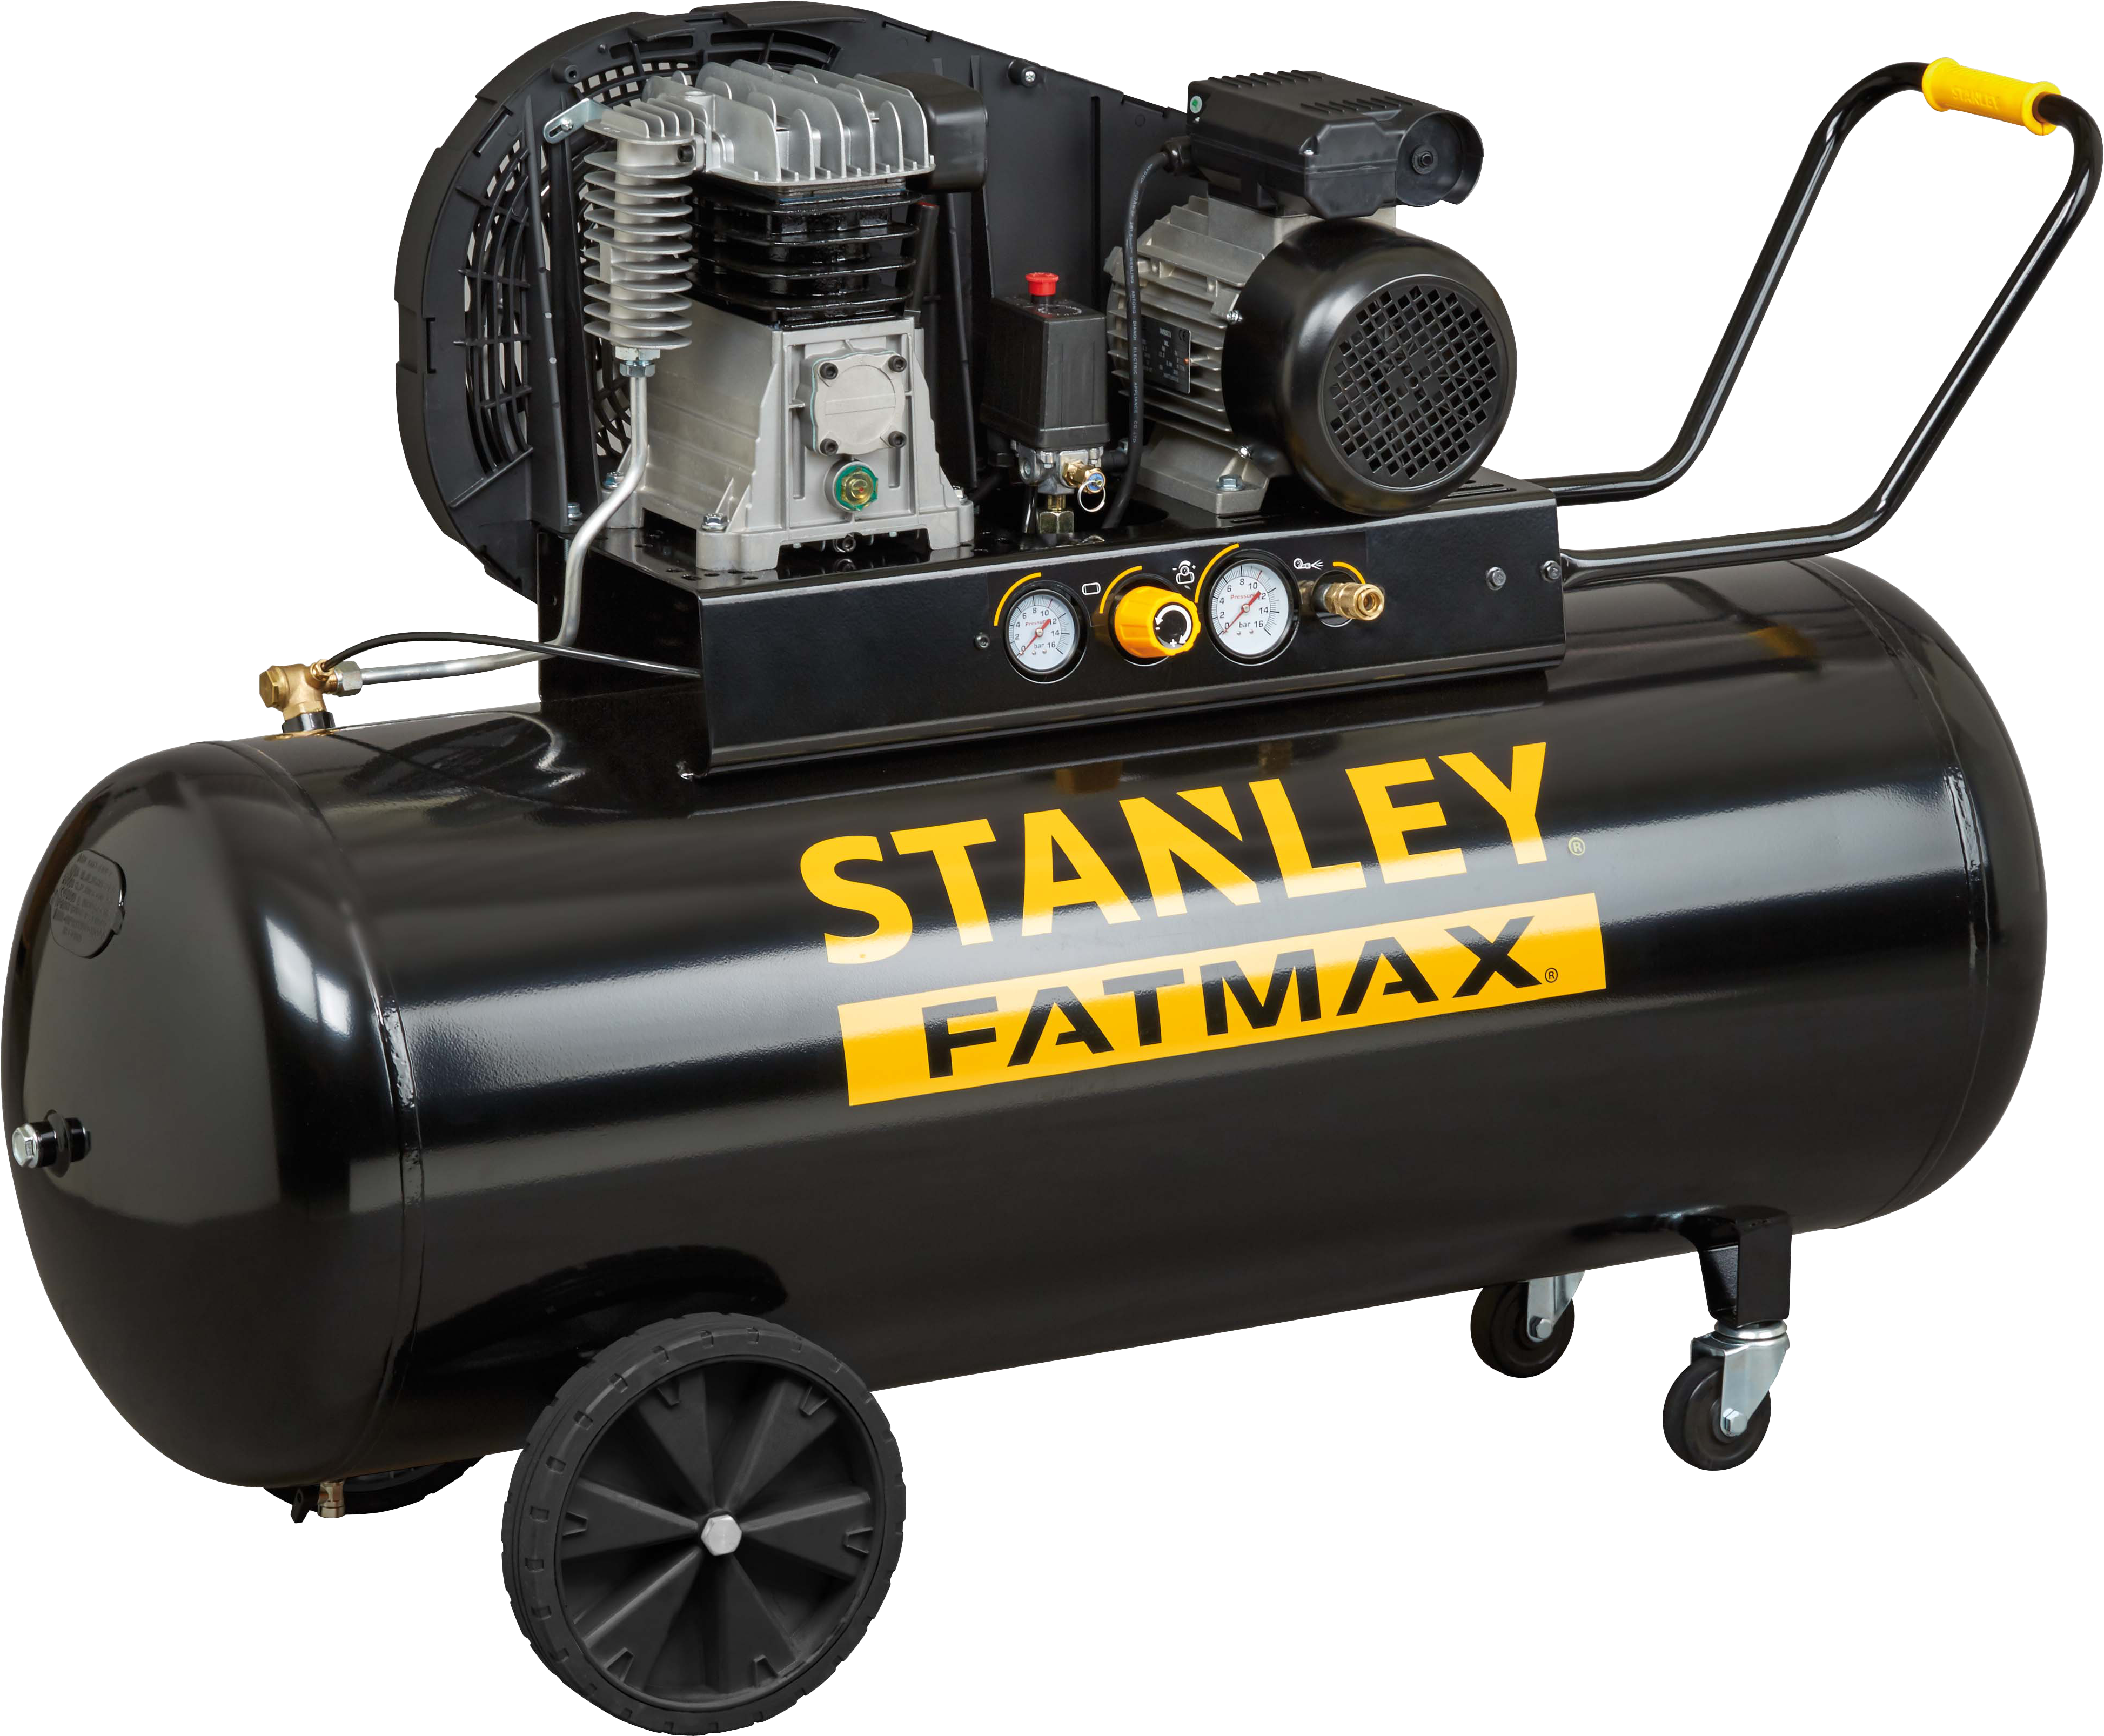 Compresor stanley fatmax b 350/10/200 t stanley fatmax